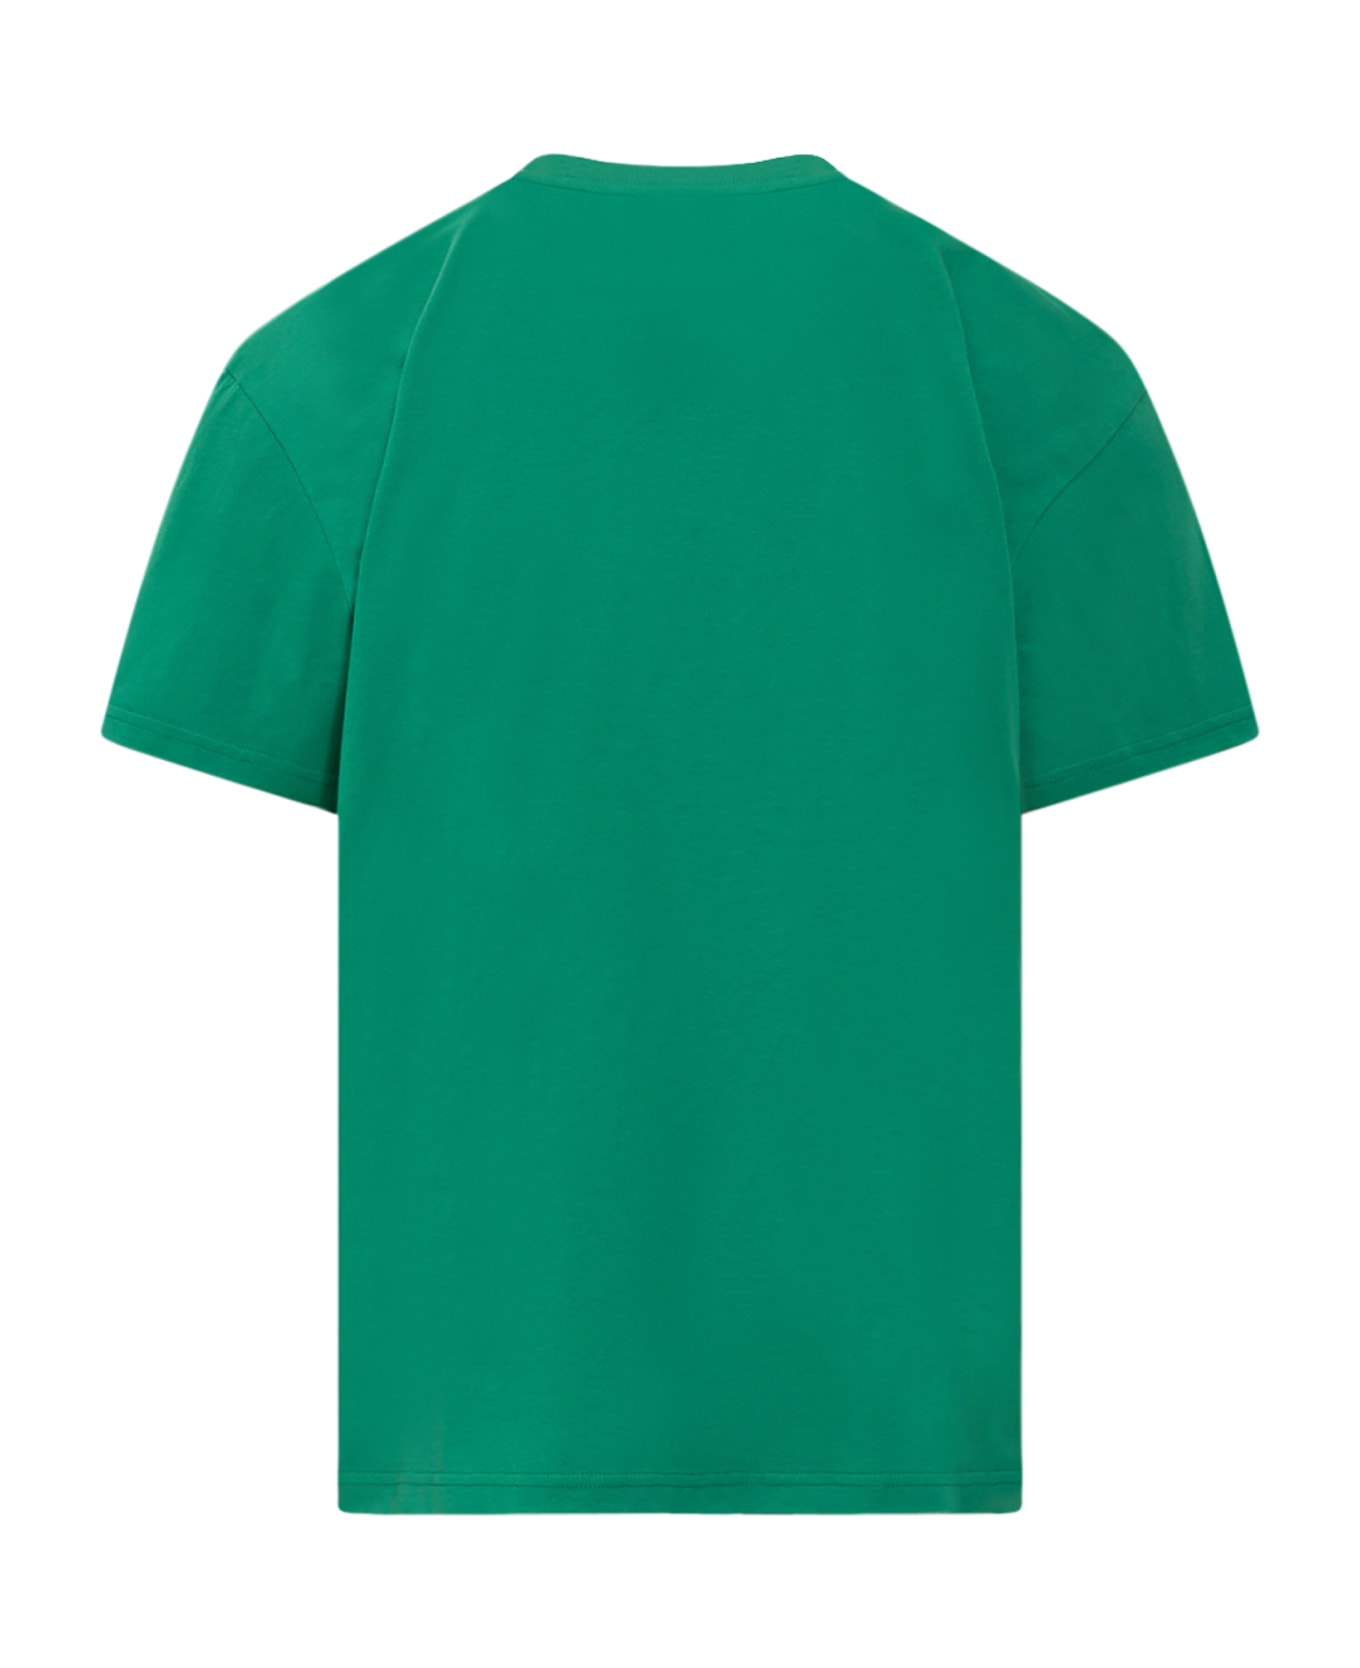 J.W. Anderson Anchor T-shirt - Racing green